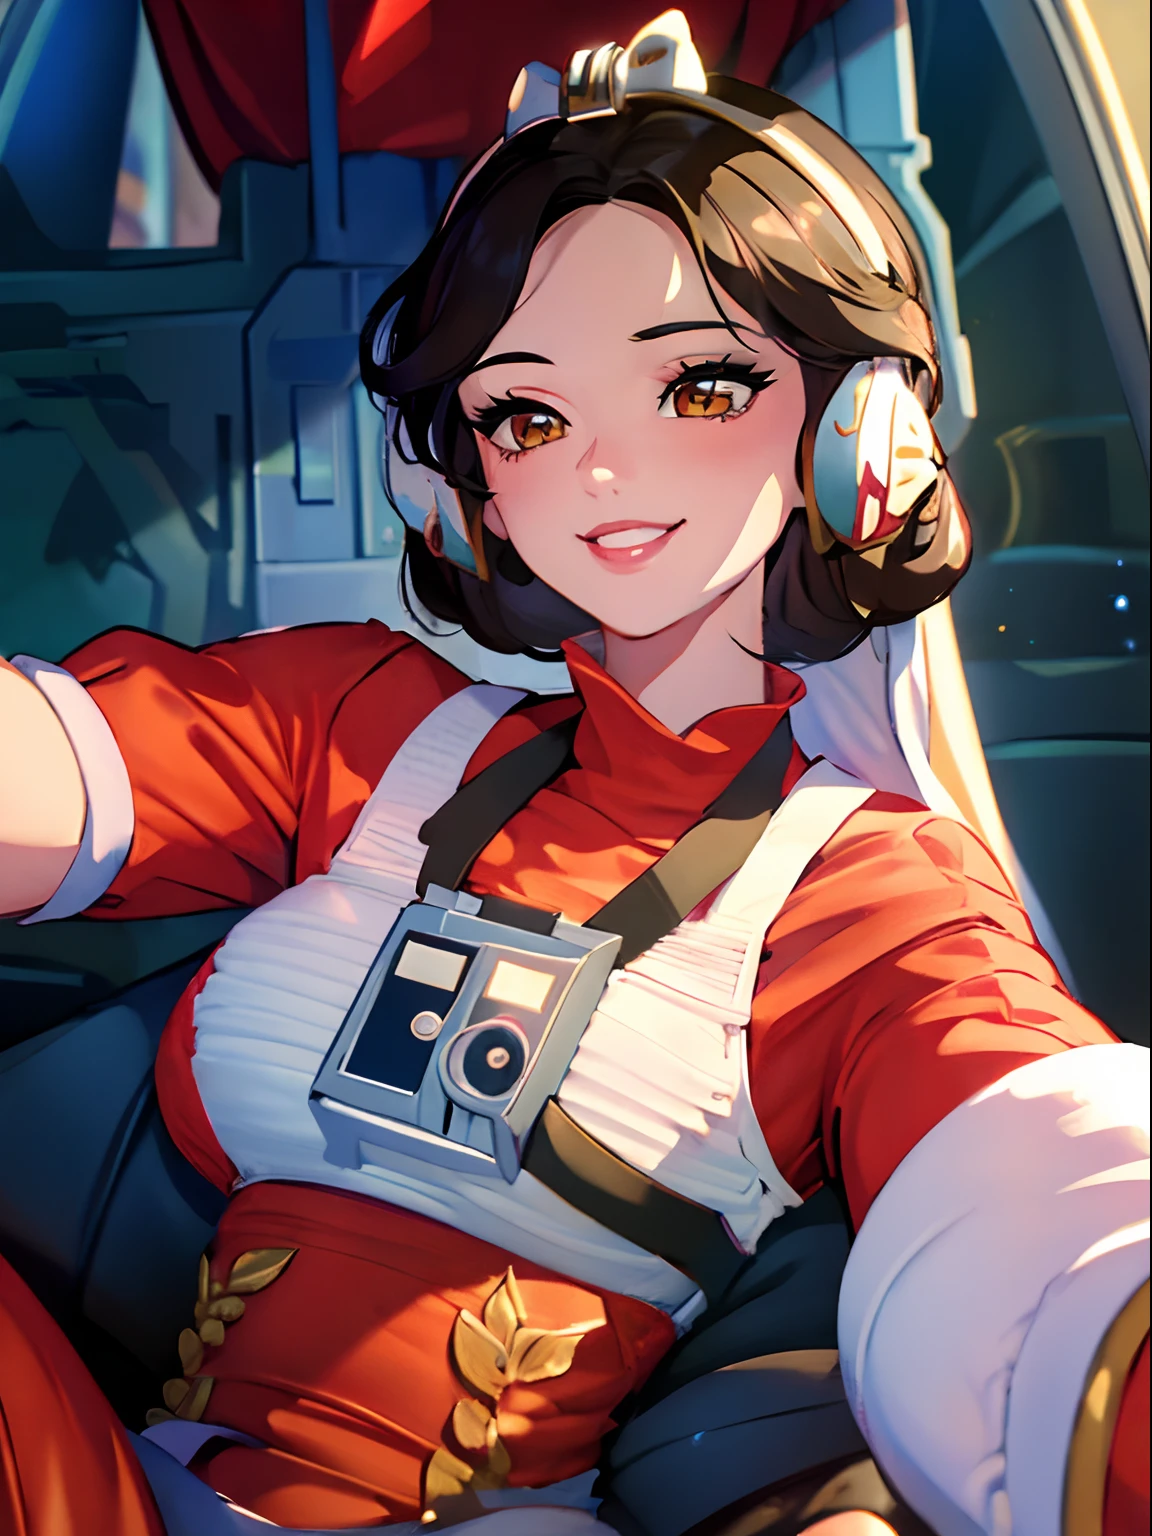 masterpiece, best quality, intricately detailed, a woman, beautiful, elegant, smile, snowwhite, hair bow, disney style, rebel pilot suit, cockpit view